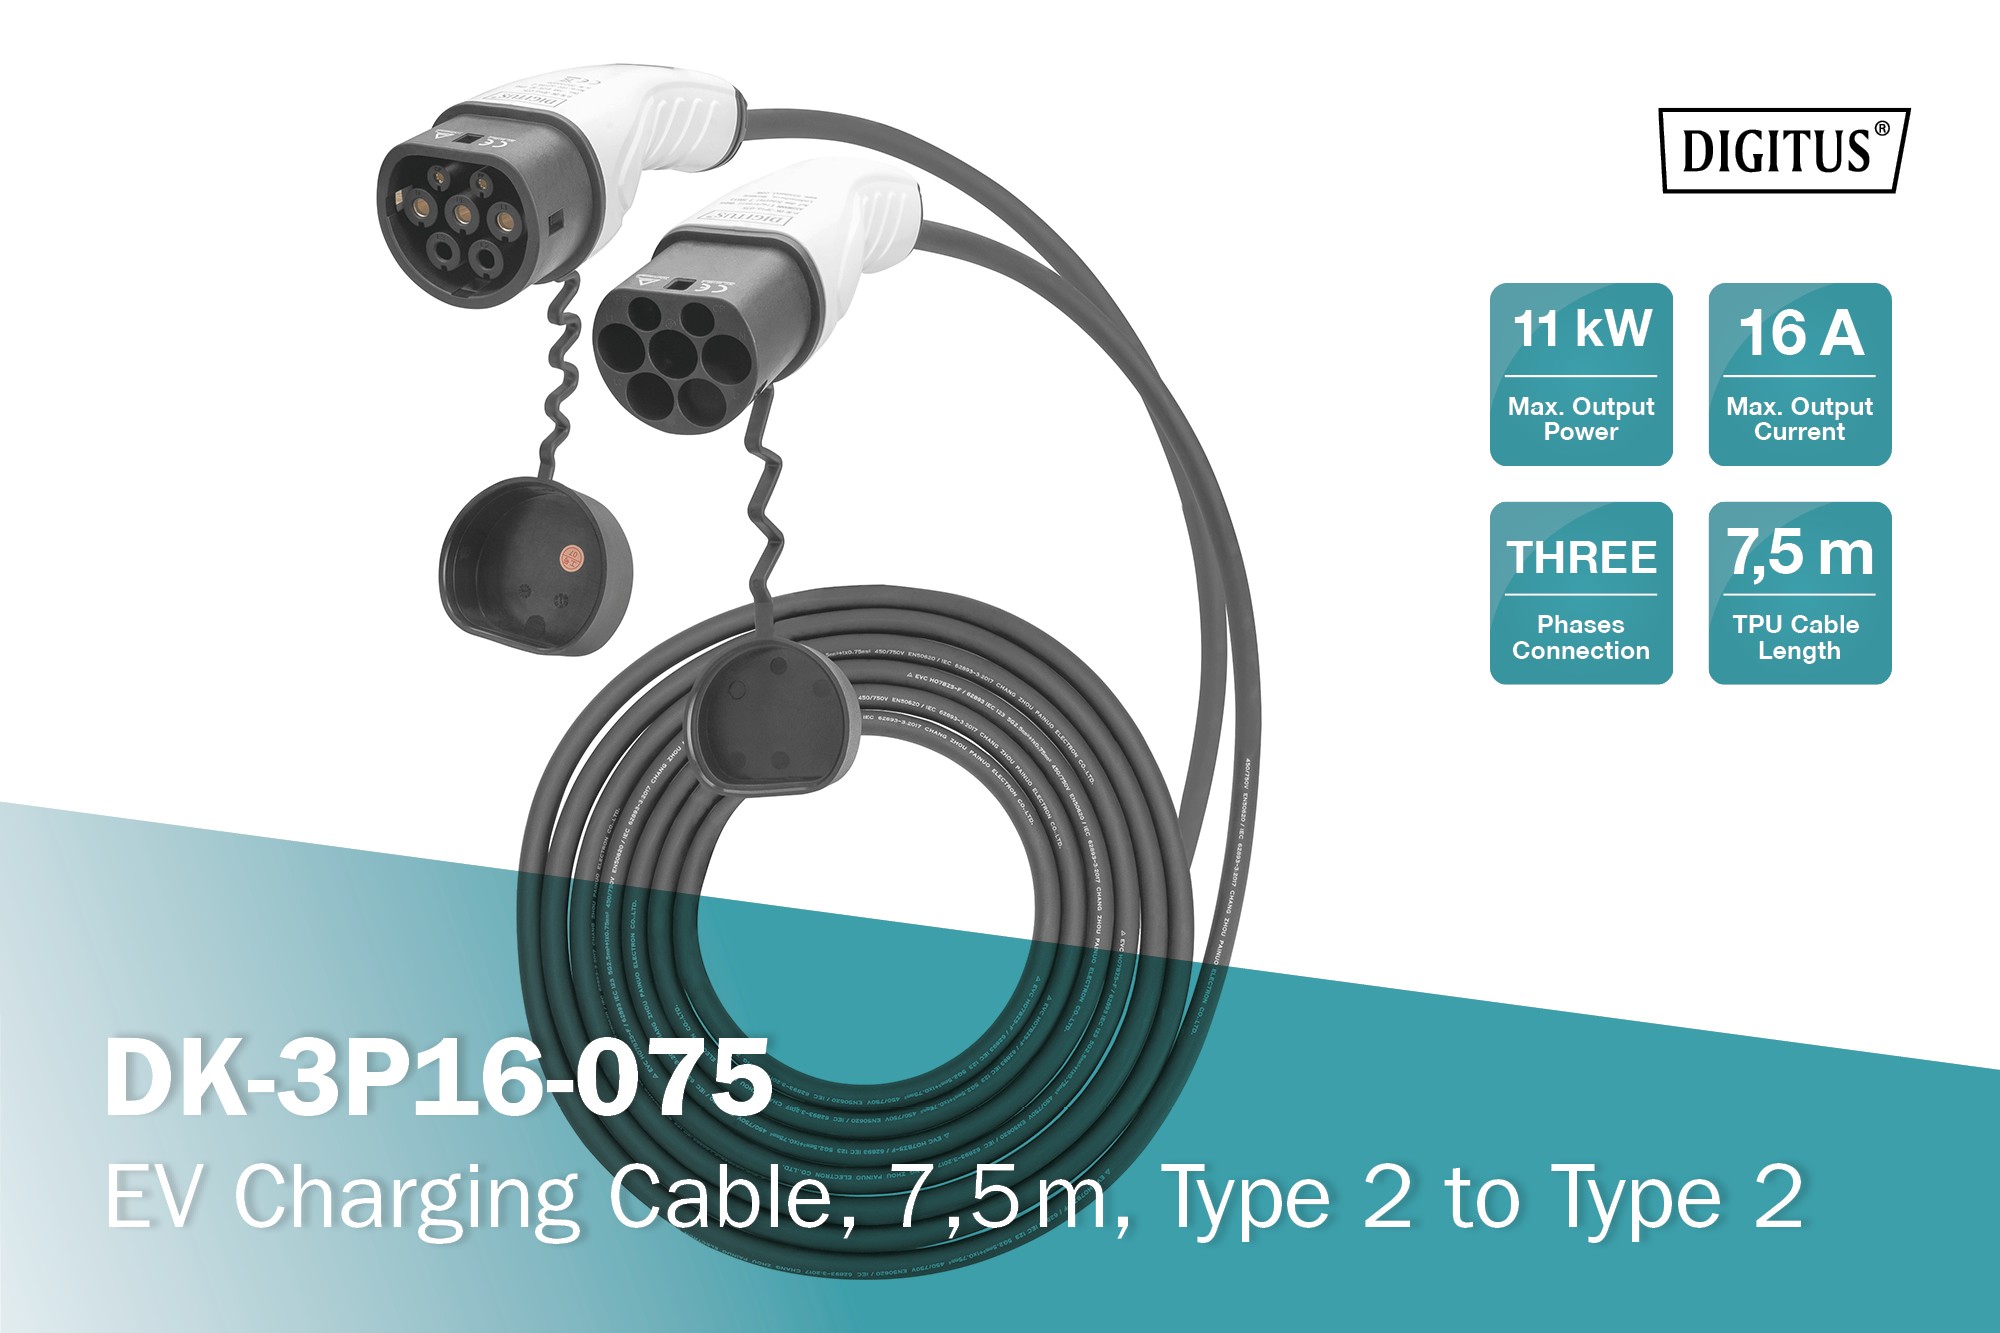 DK-3P16-075  Cable VE carga, Tipo 2 Mennekes 16A trifasica 11kW  7,5 metros Digitus